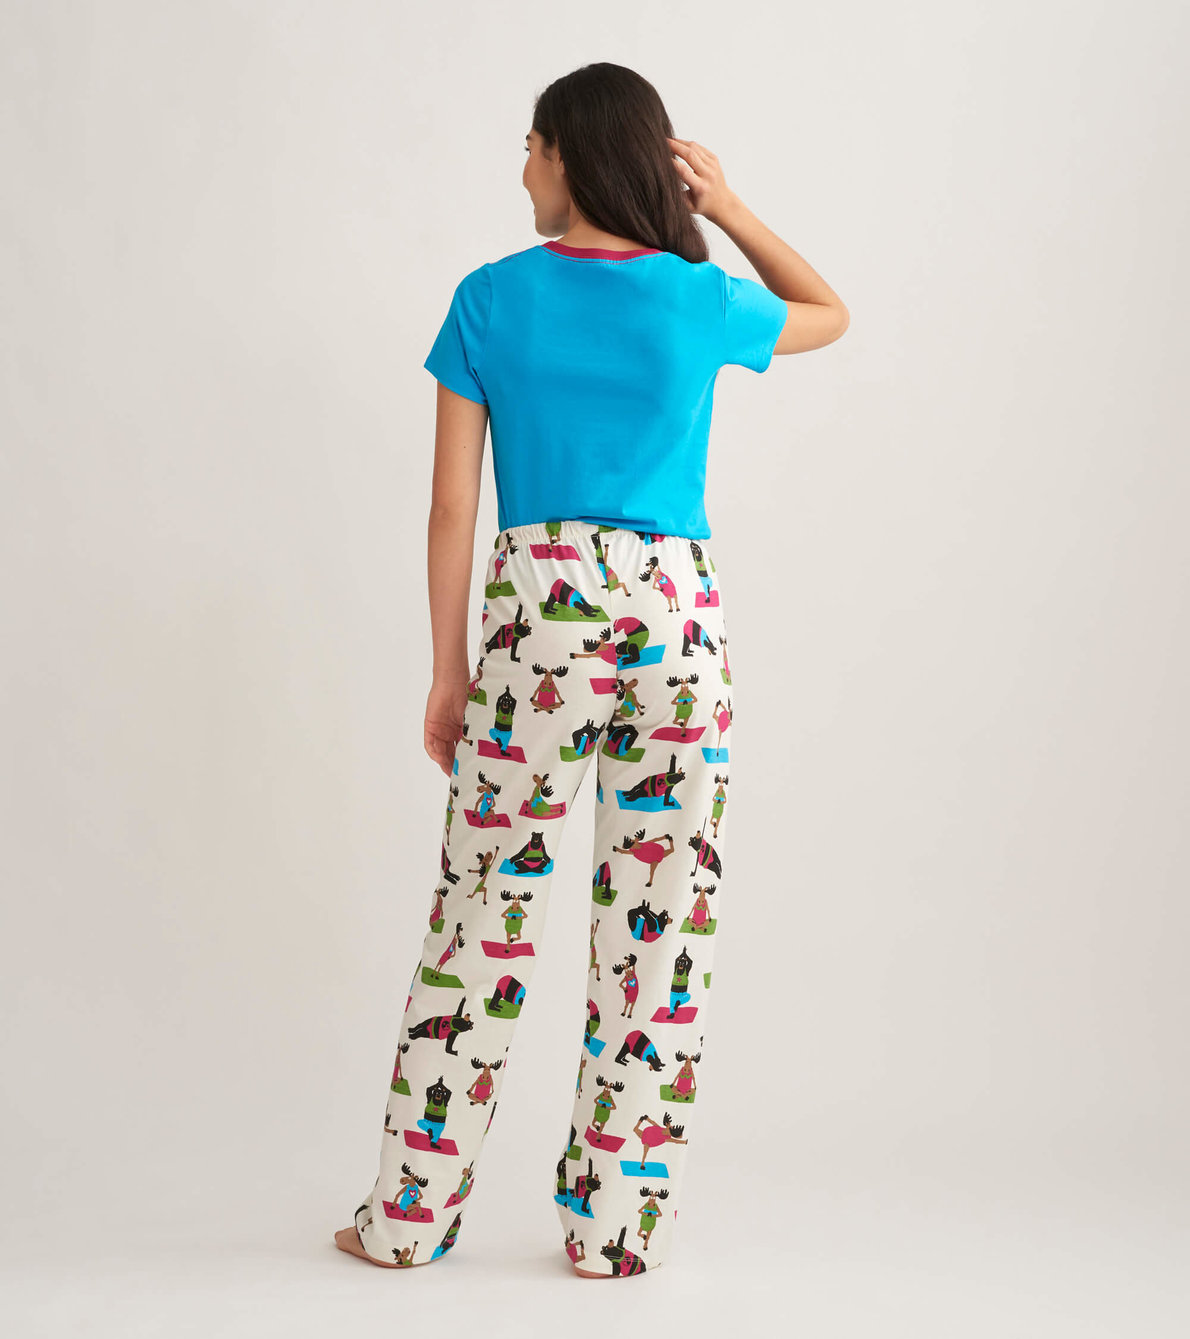 View larger image of Yoga Bear Knit Women's Jersey Pajama Pants